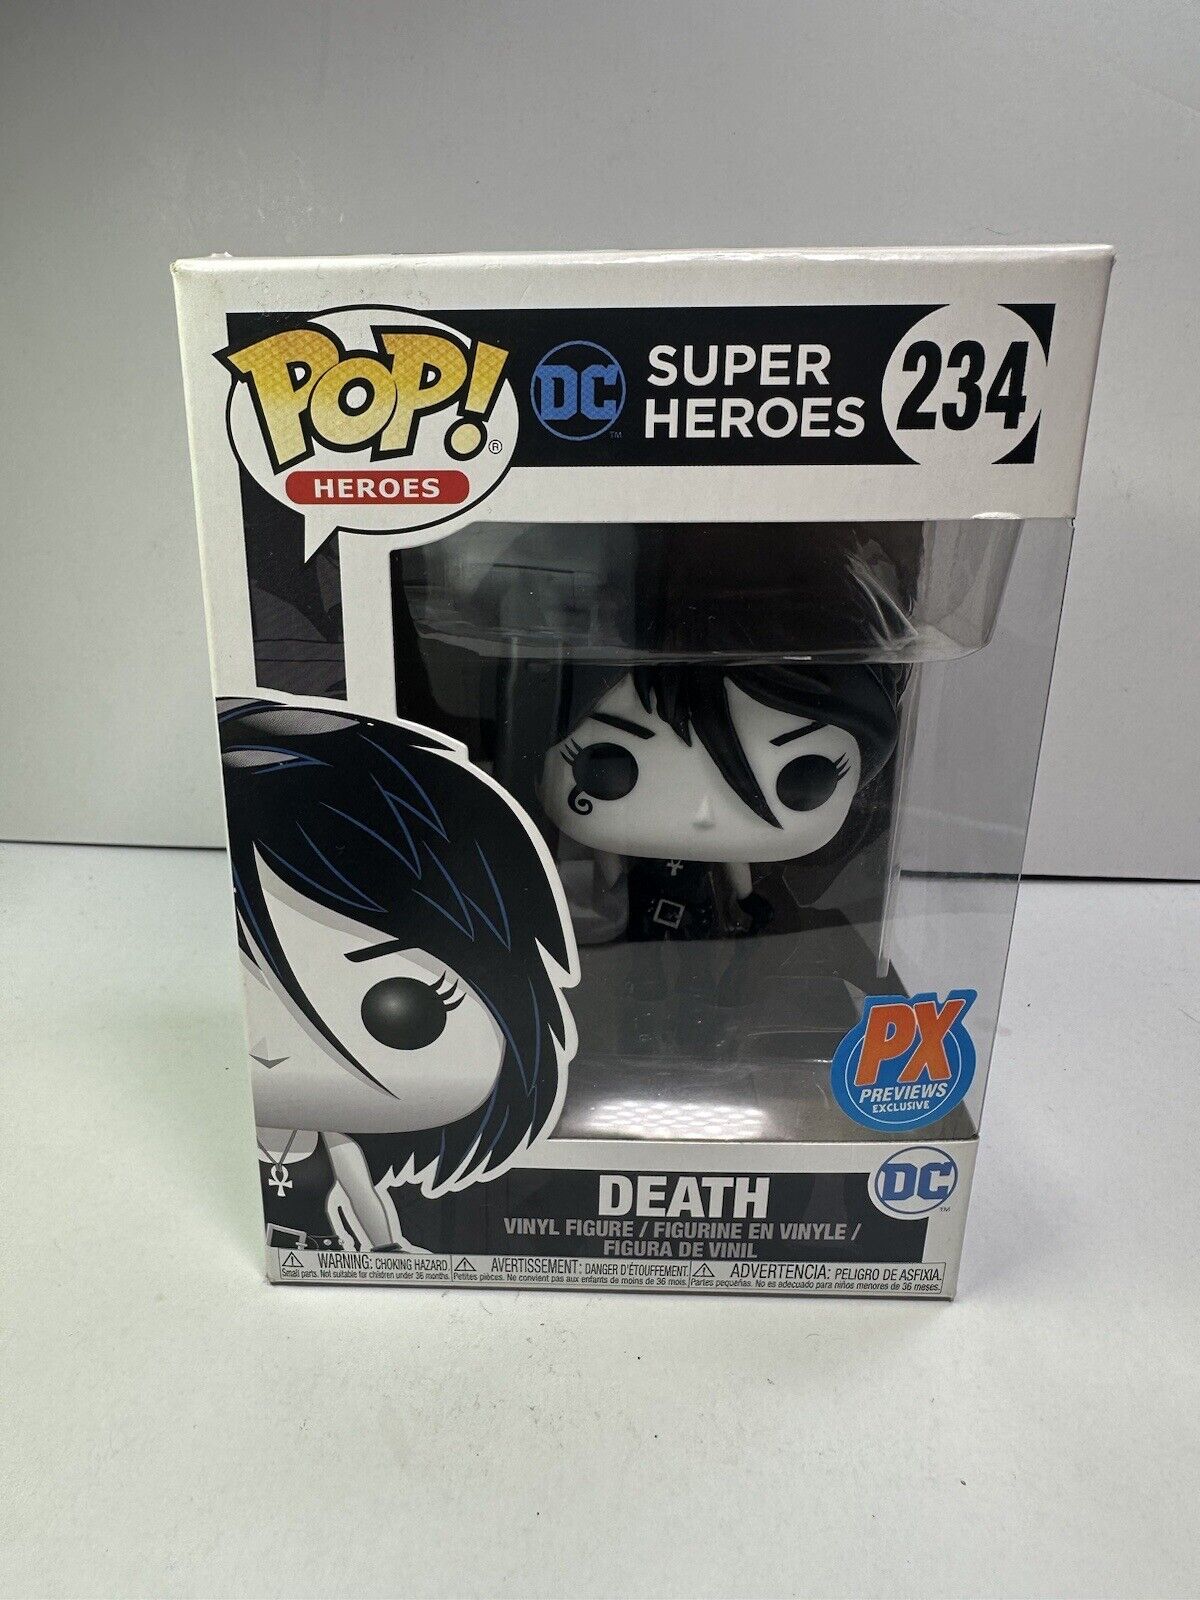 Funko Pop Death DC Super Heroes PX Exclusive #234